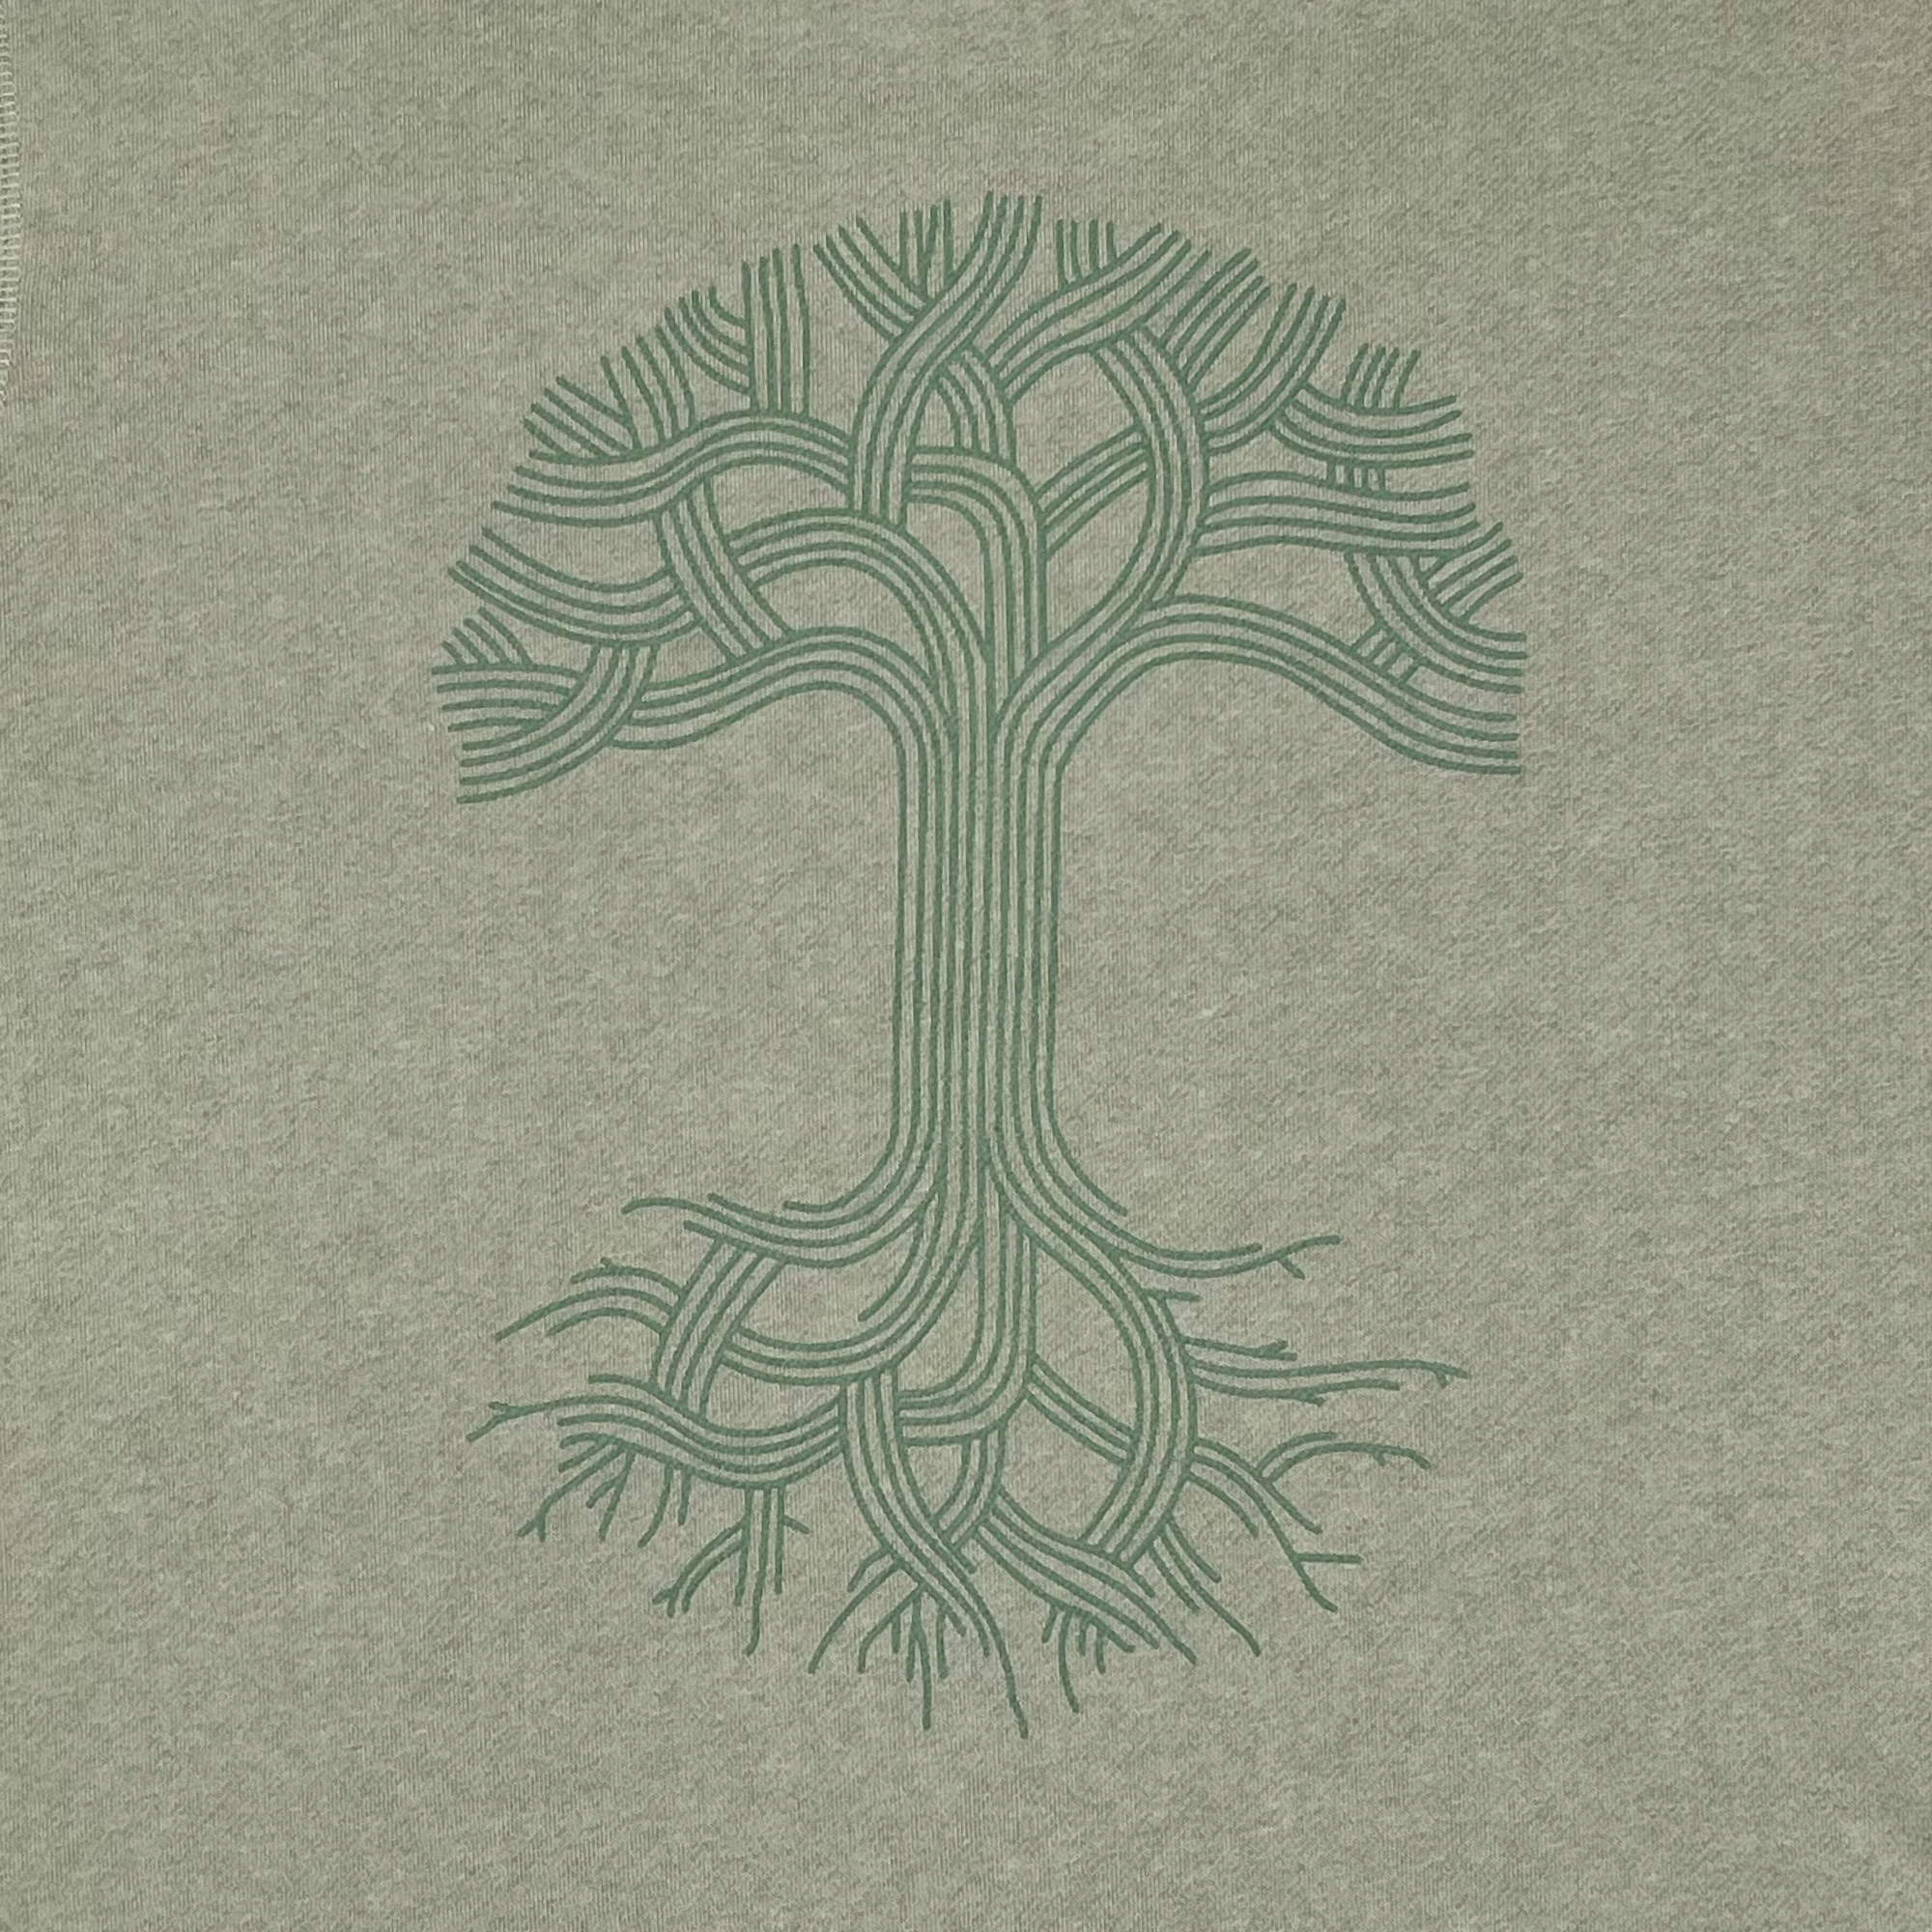 Detailed back view of Premium crewneck sweatshirt - Oaklandish tree logo, Eucalyptus.